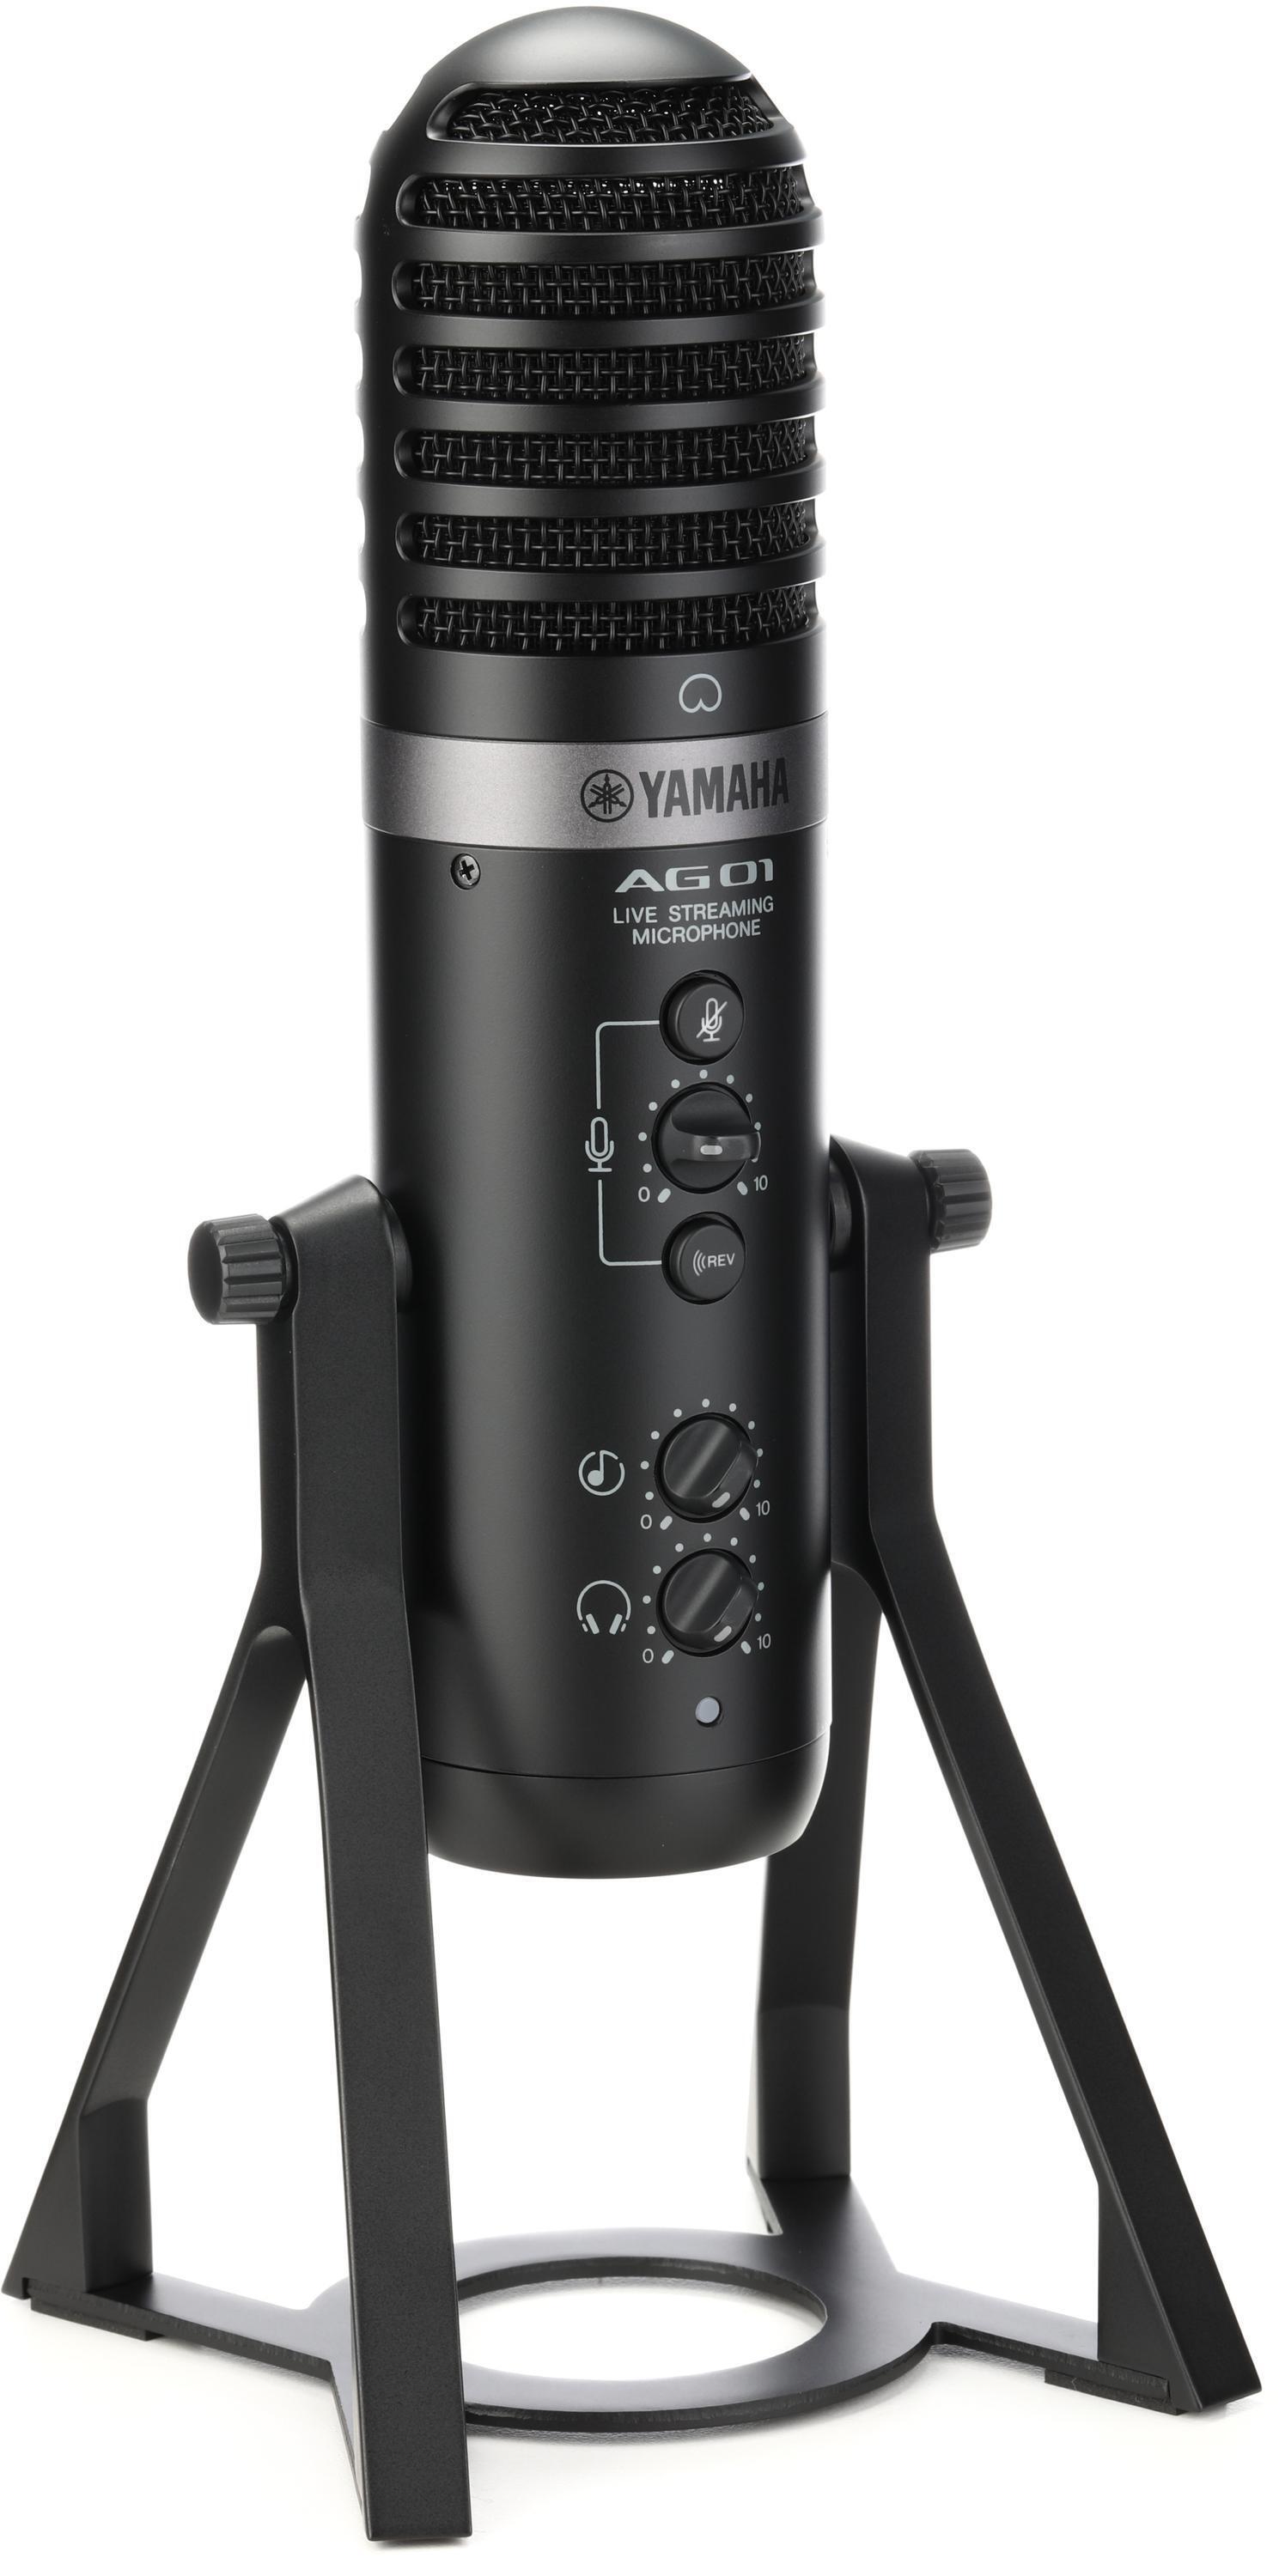 Yamaha AG01 Livestreaming USB Condenser Microphone - Black